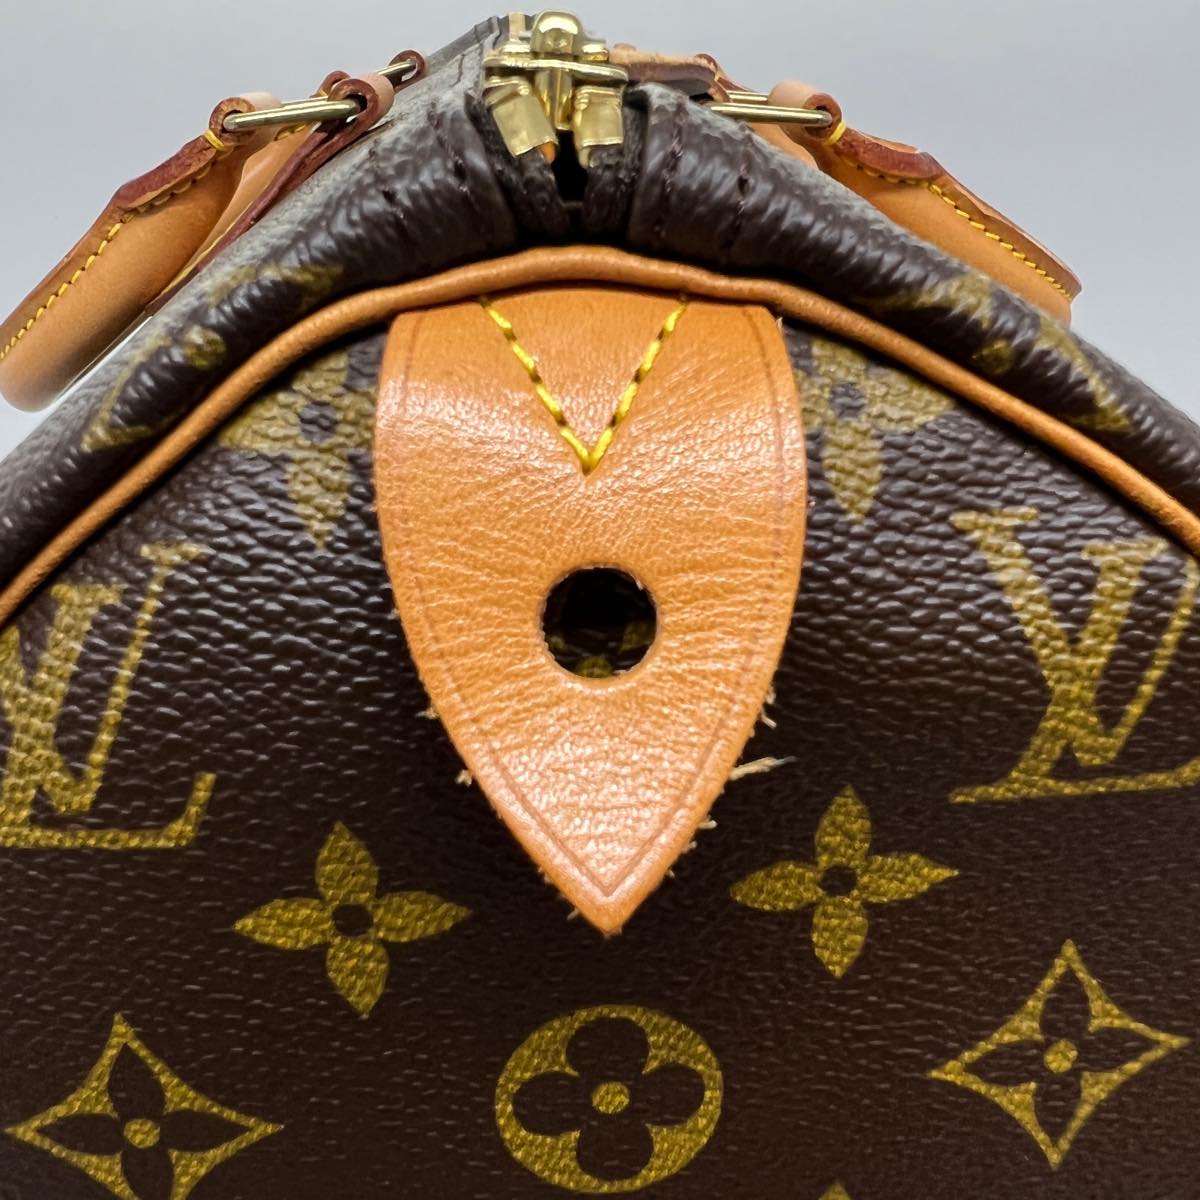 €1M Louis Vuitton “Millionaire Speedy 40” bag composed of